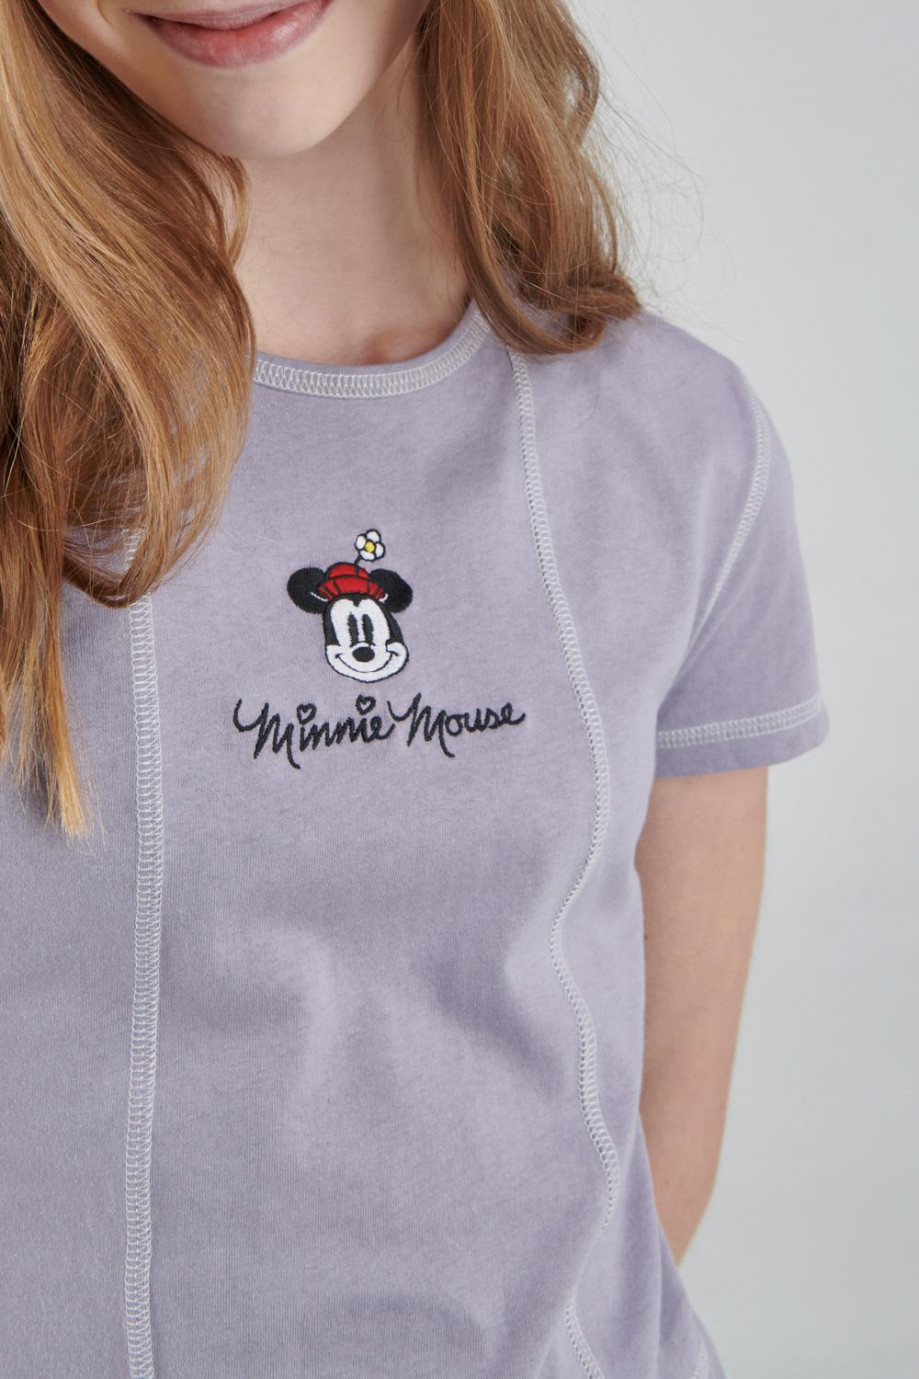 Camiseta manga corta de Mickey.